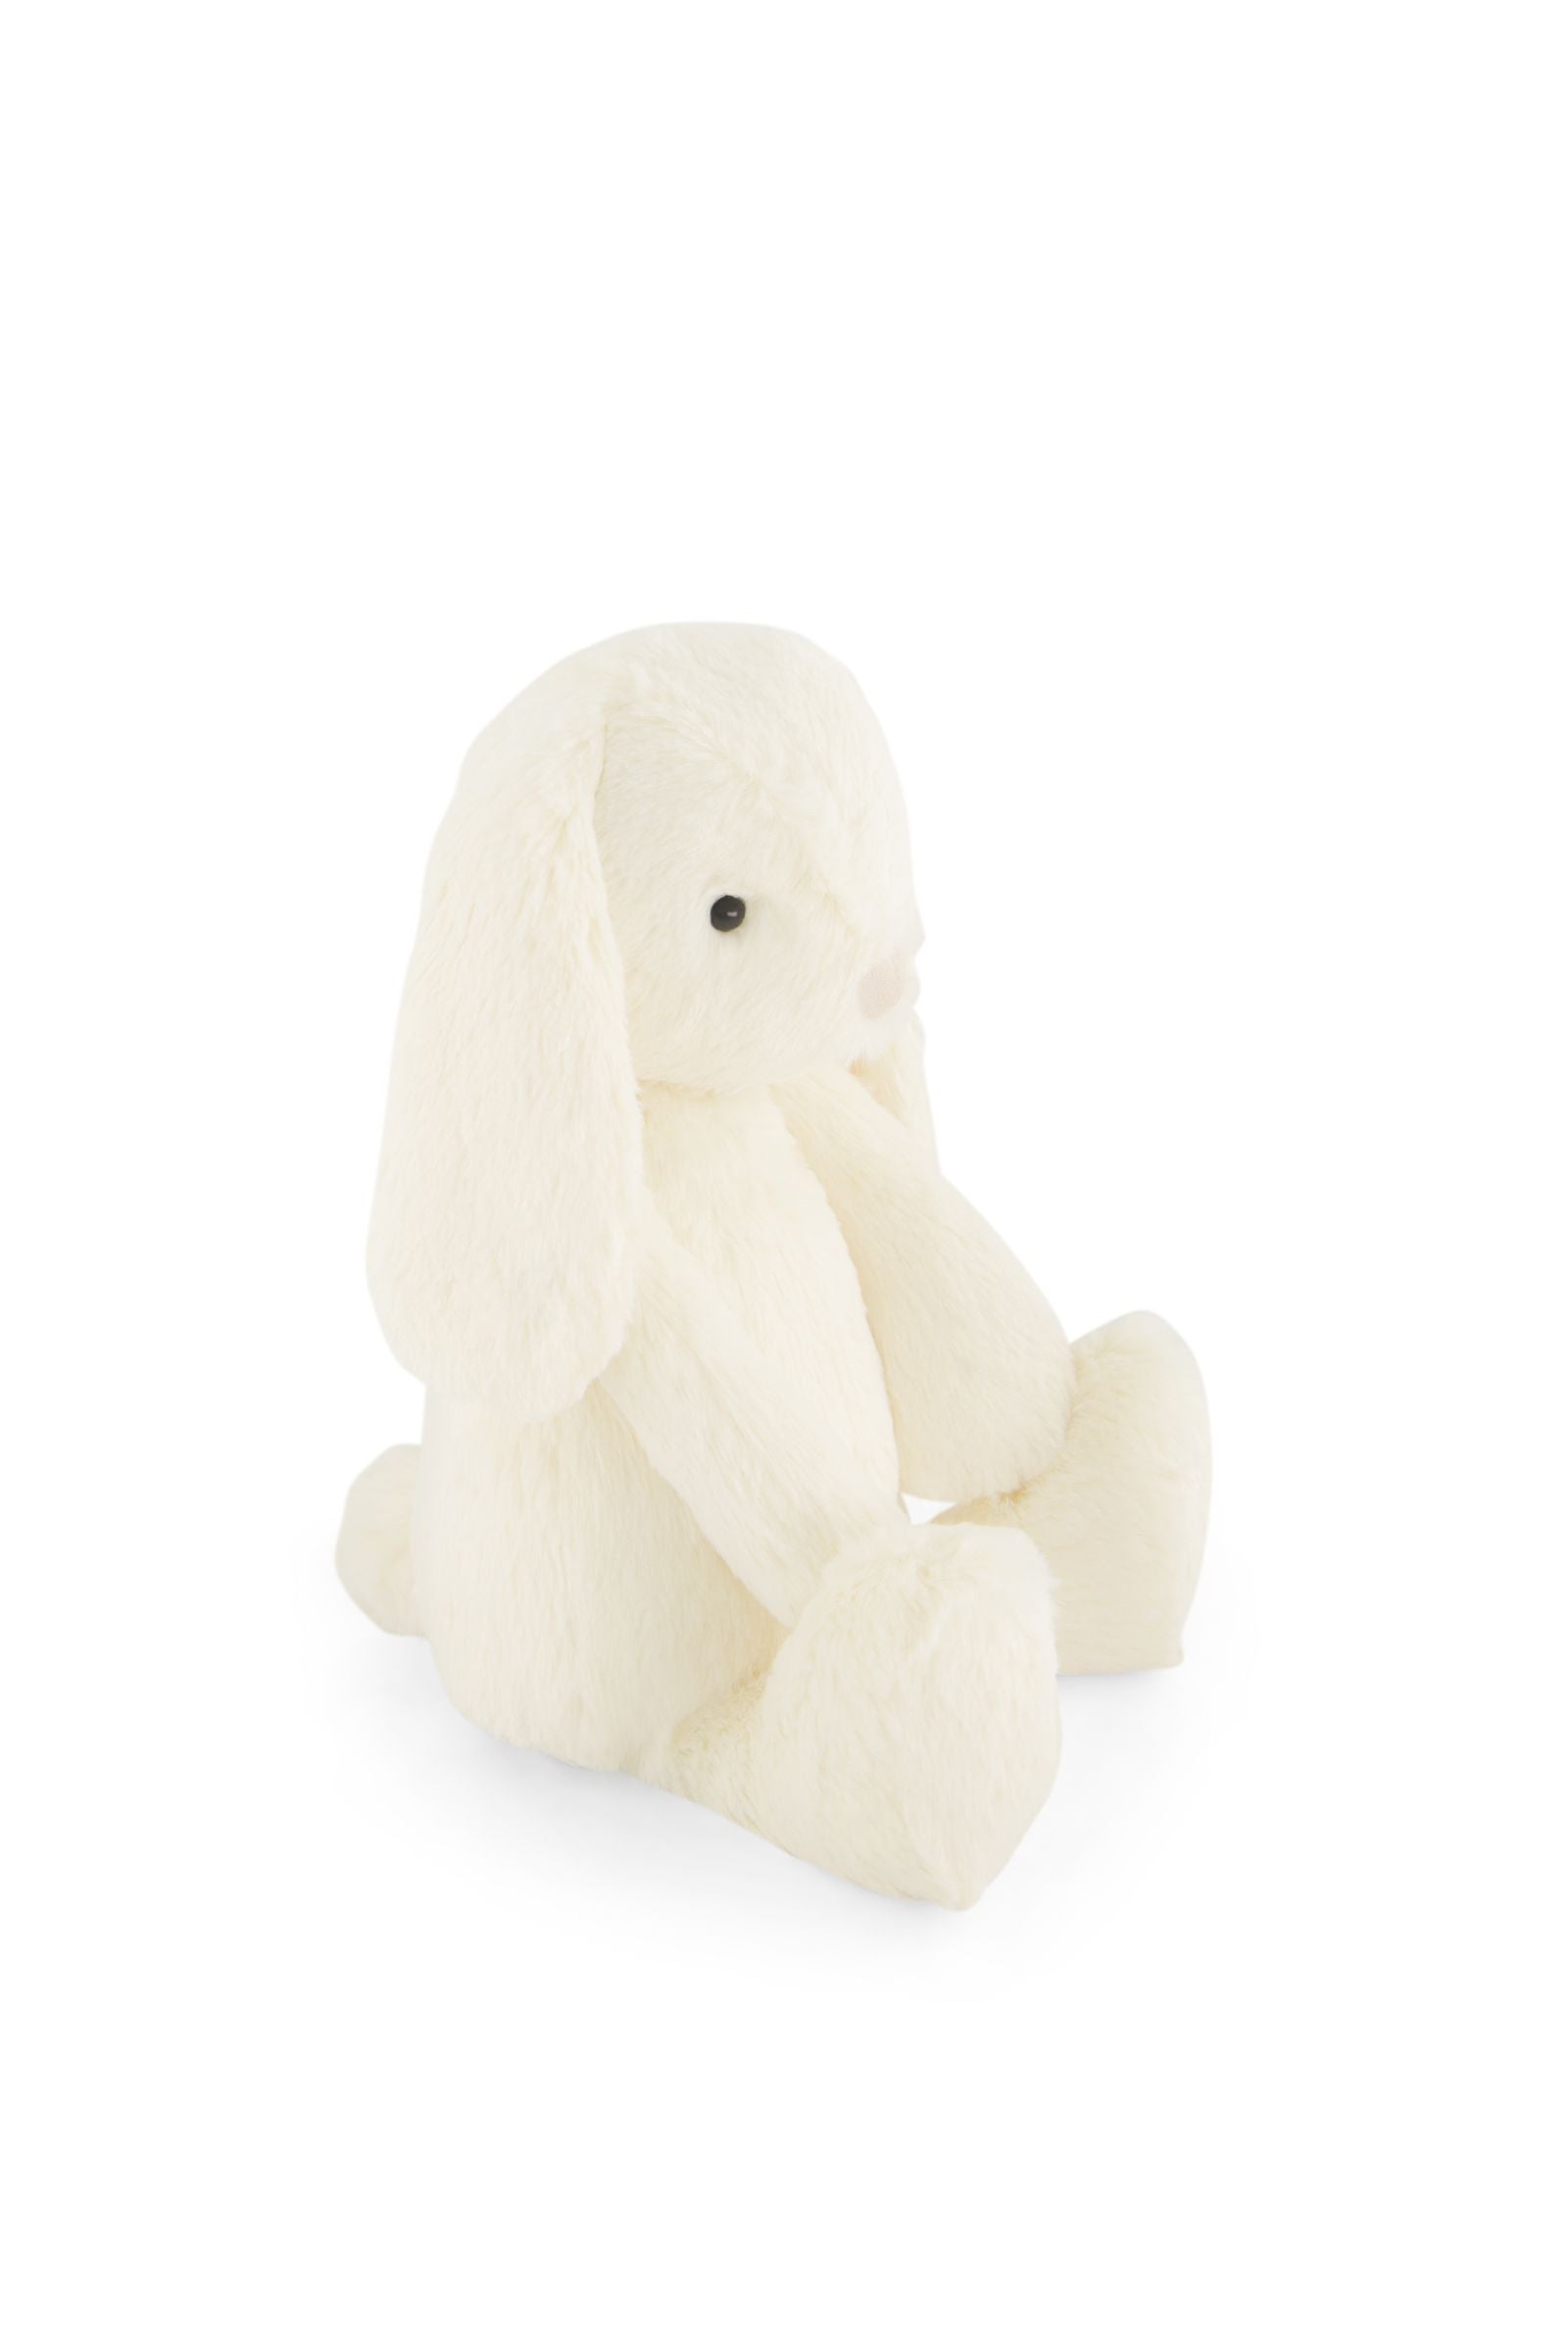 Snuggle Bunnies - Penelope the Bunny - Marshmallow 30cm-Toys-Jamie Kay-The Bay Room